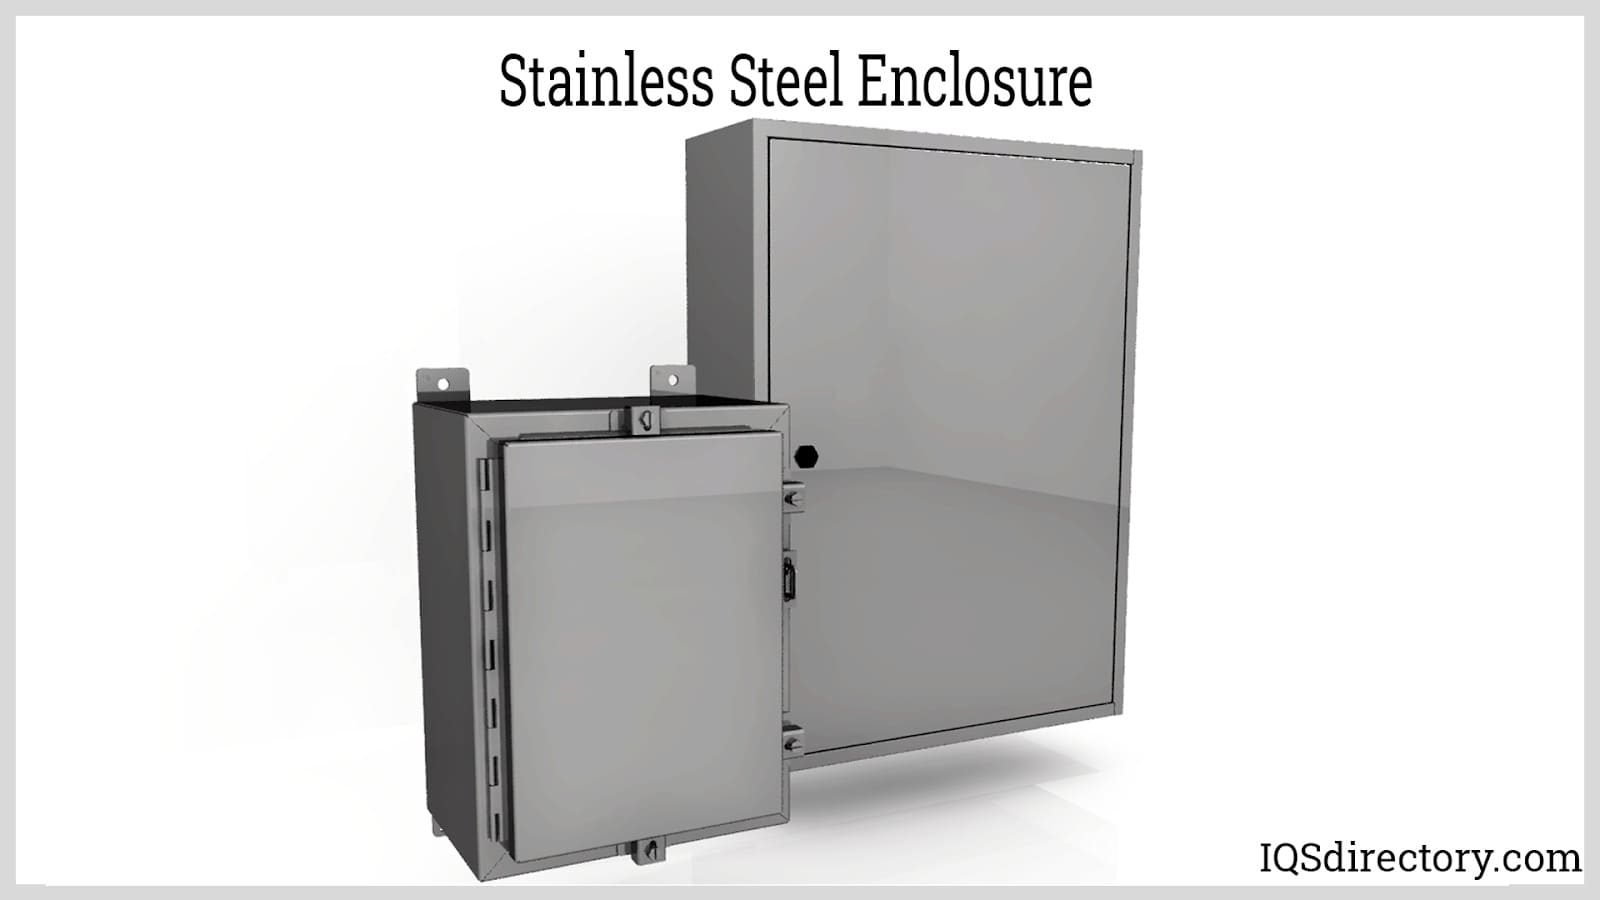 Stainless Steel Enclosure